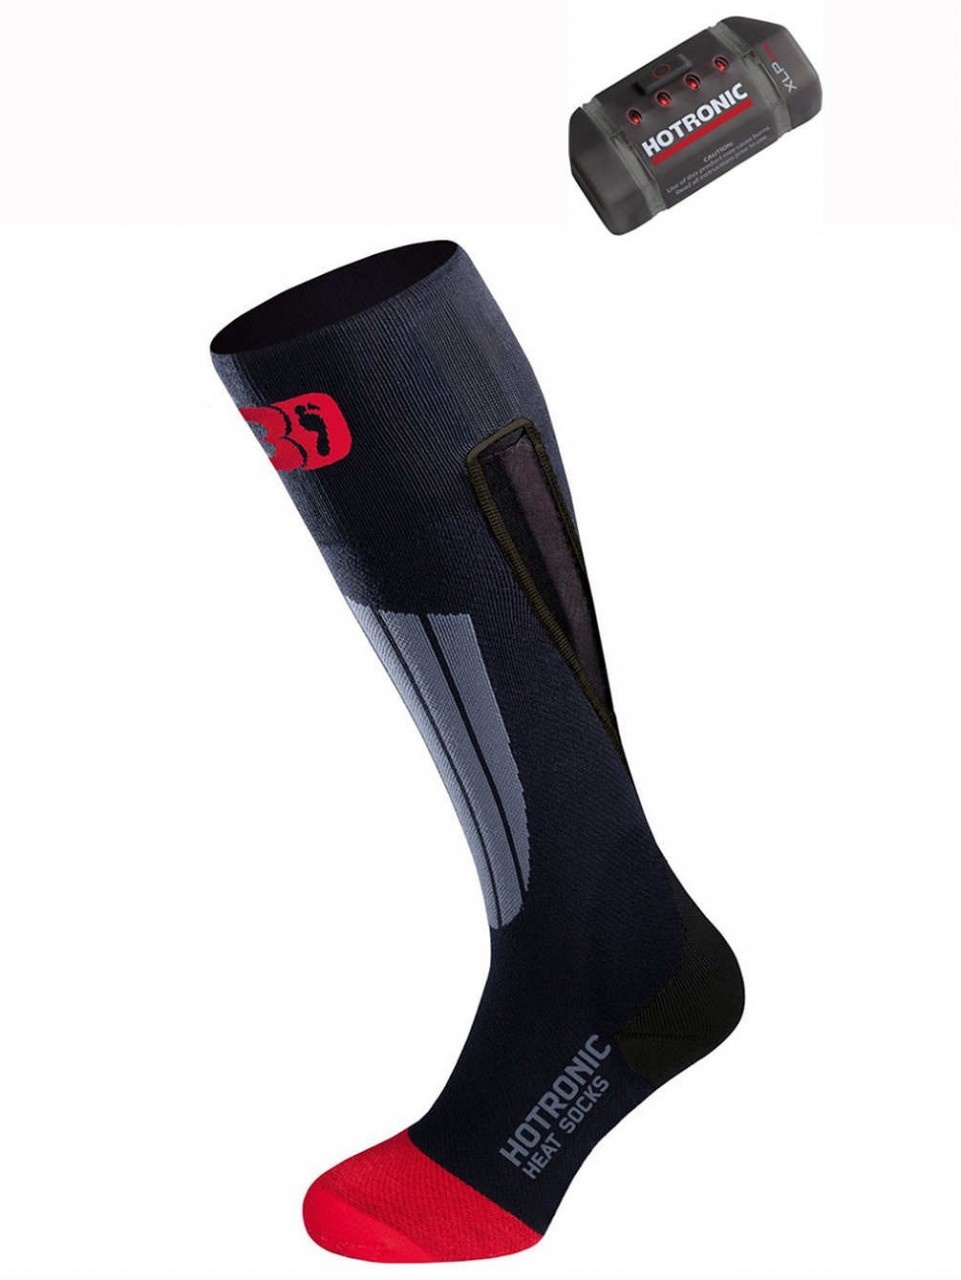 Bootdoc Hotronic Heat Socks XLP One - Heizsocken